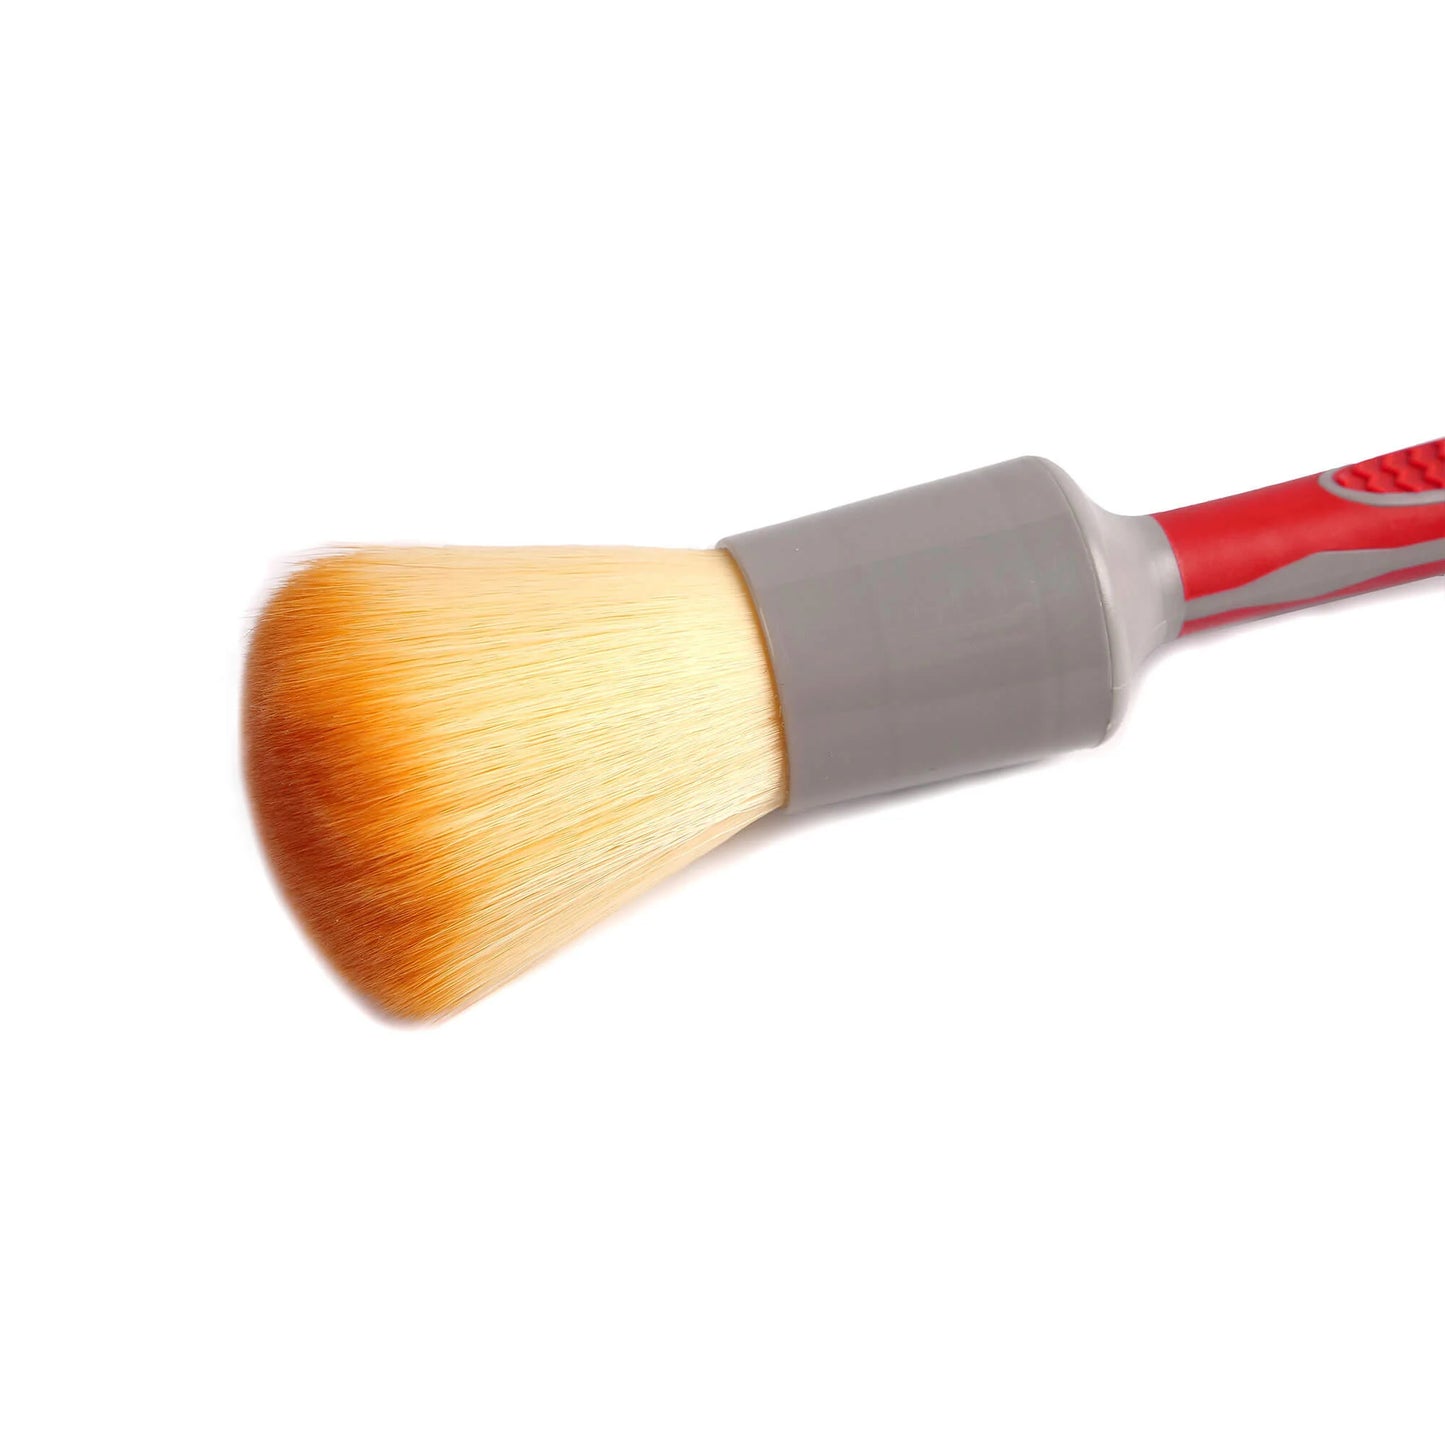 Detailing Brush – Red & Grey - Ultra Soft 12mm